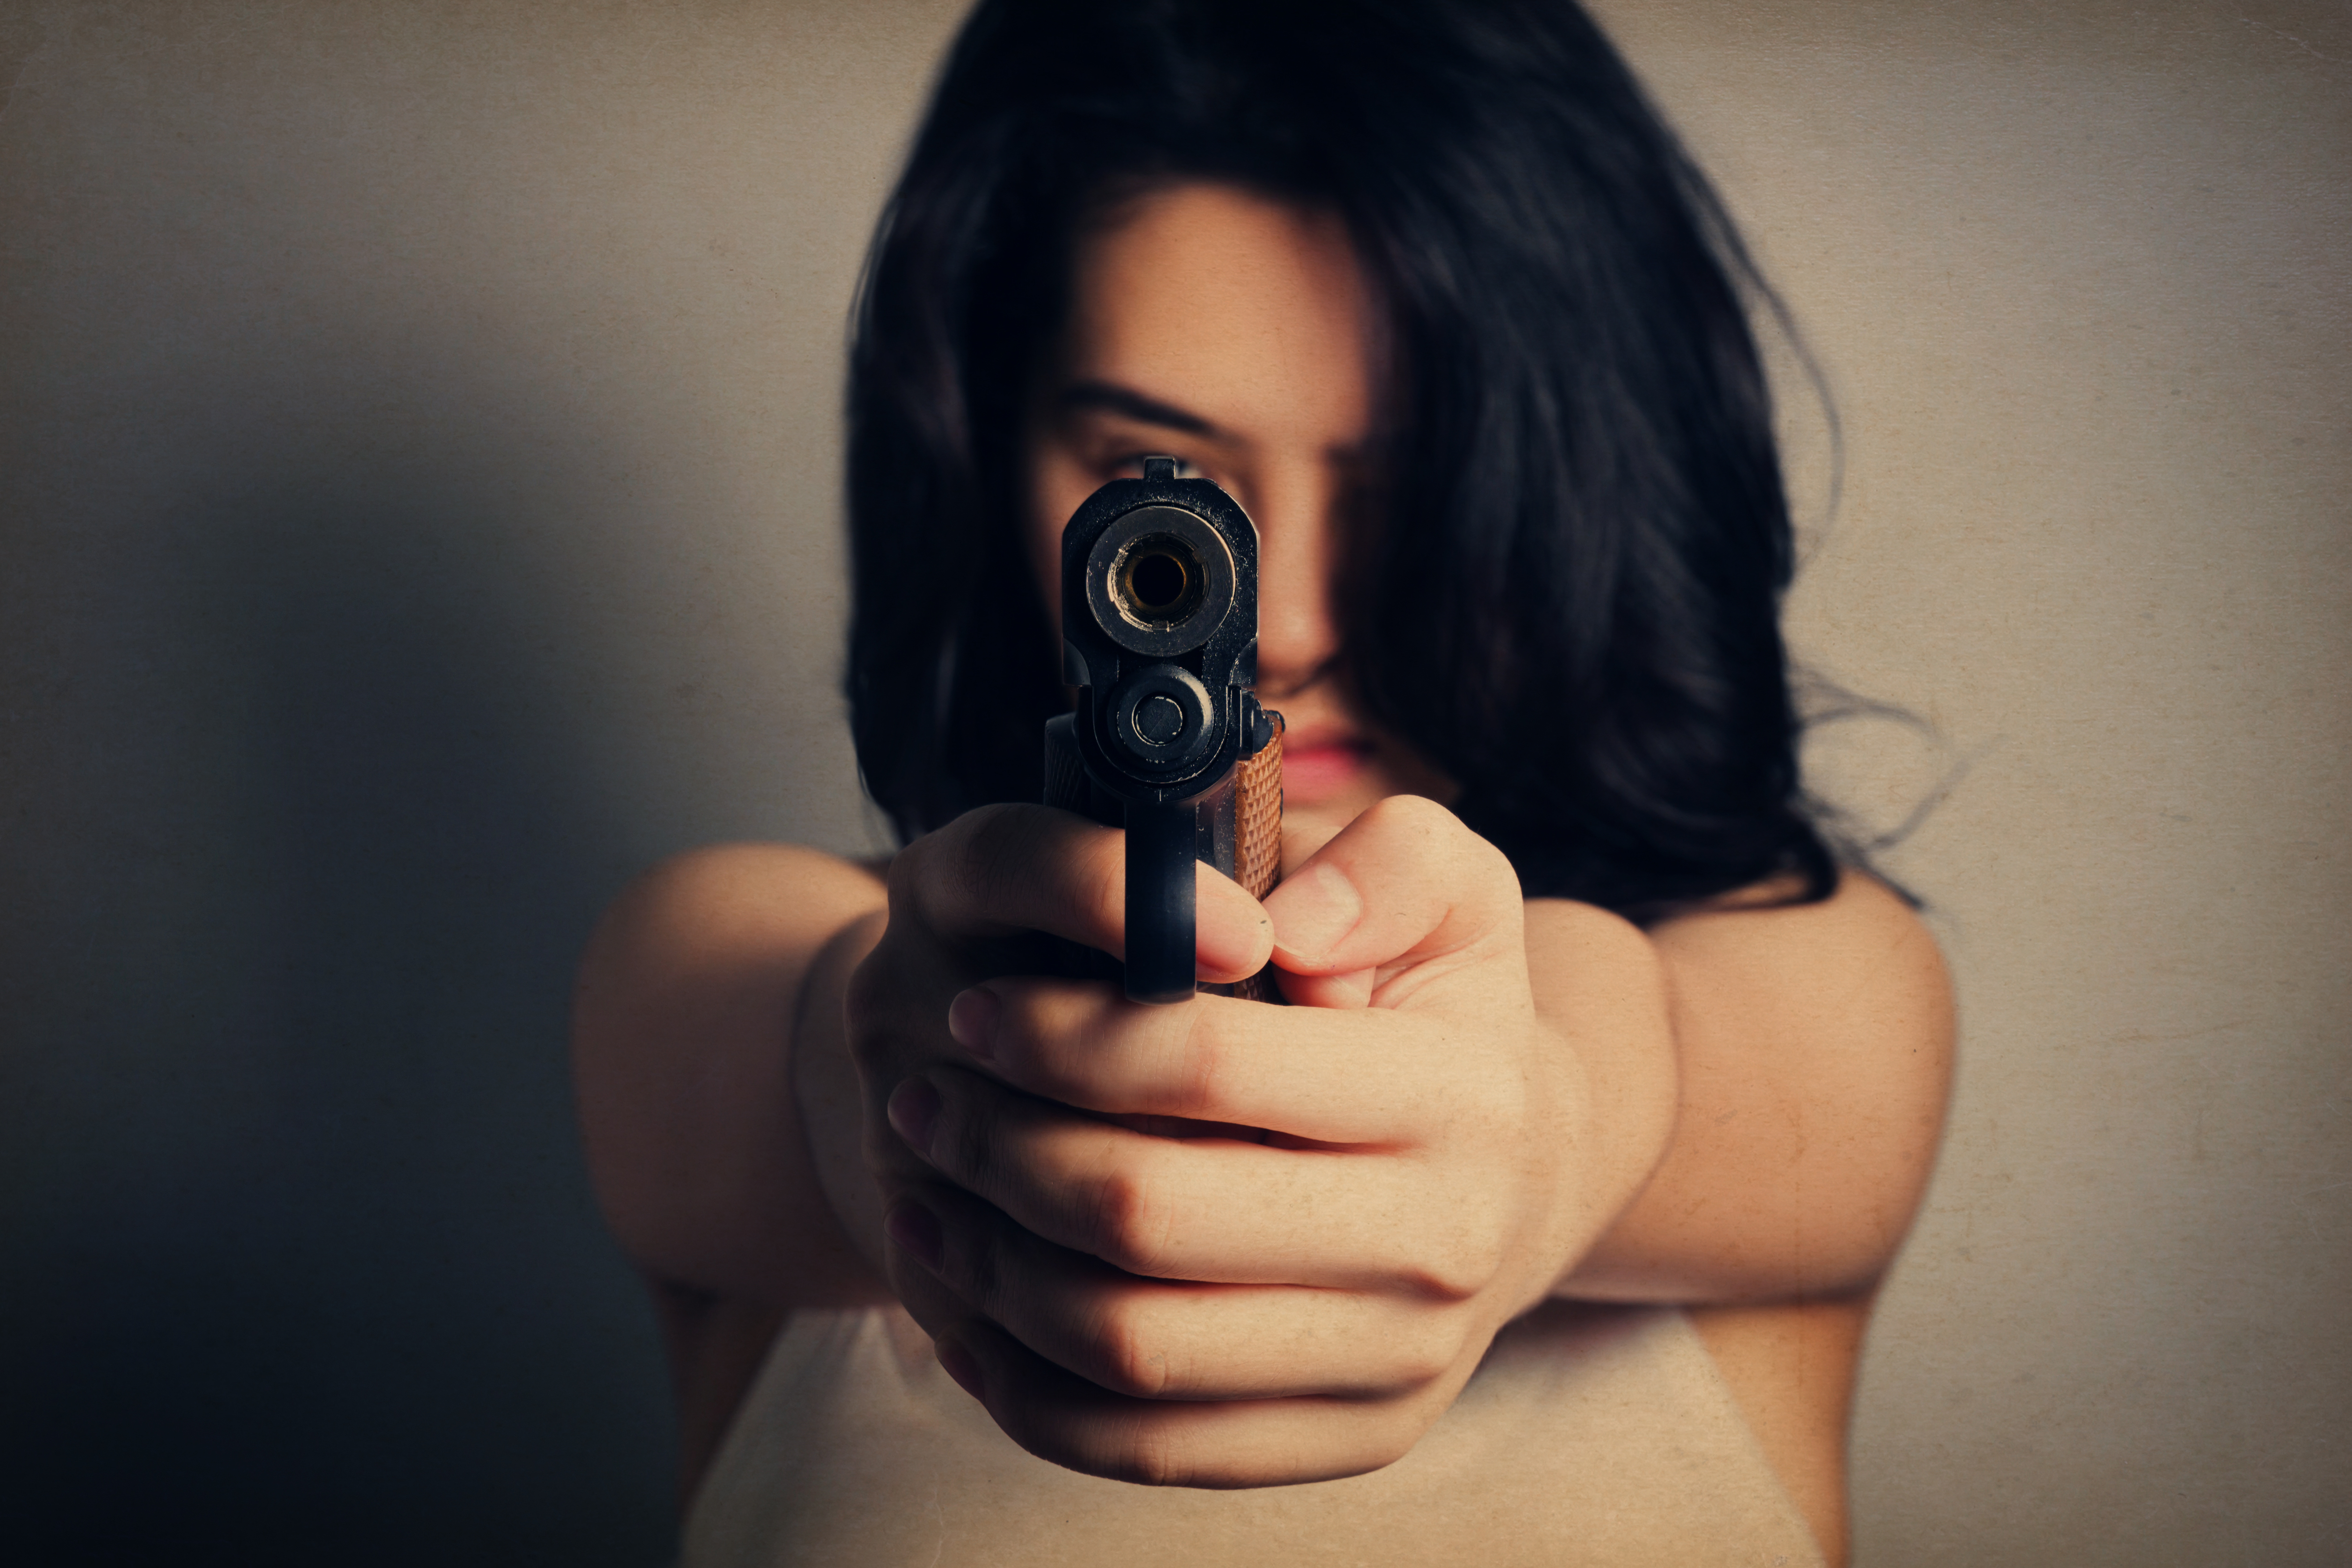 Woman aiming a gun | Source: Shutterstock